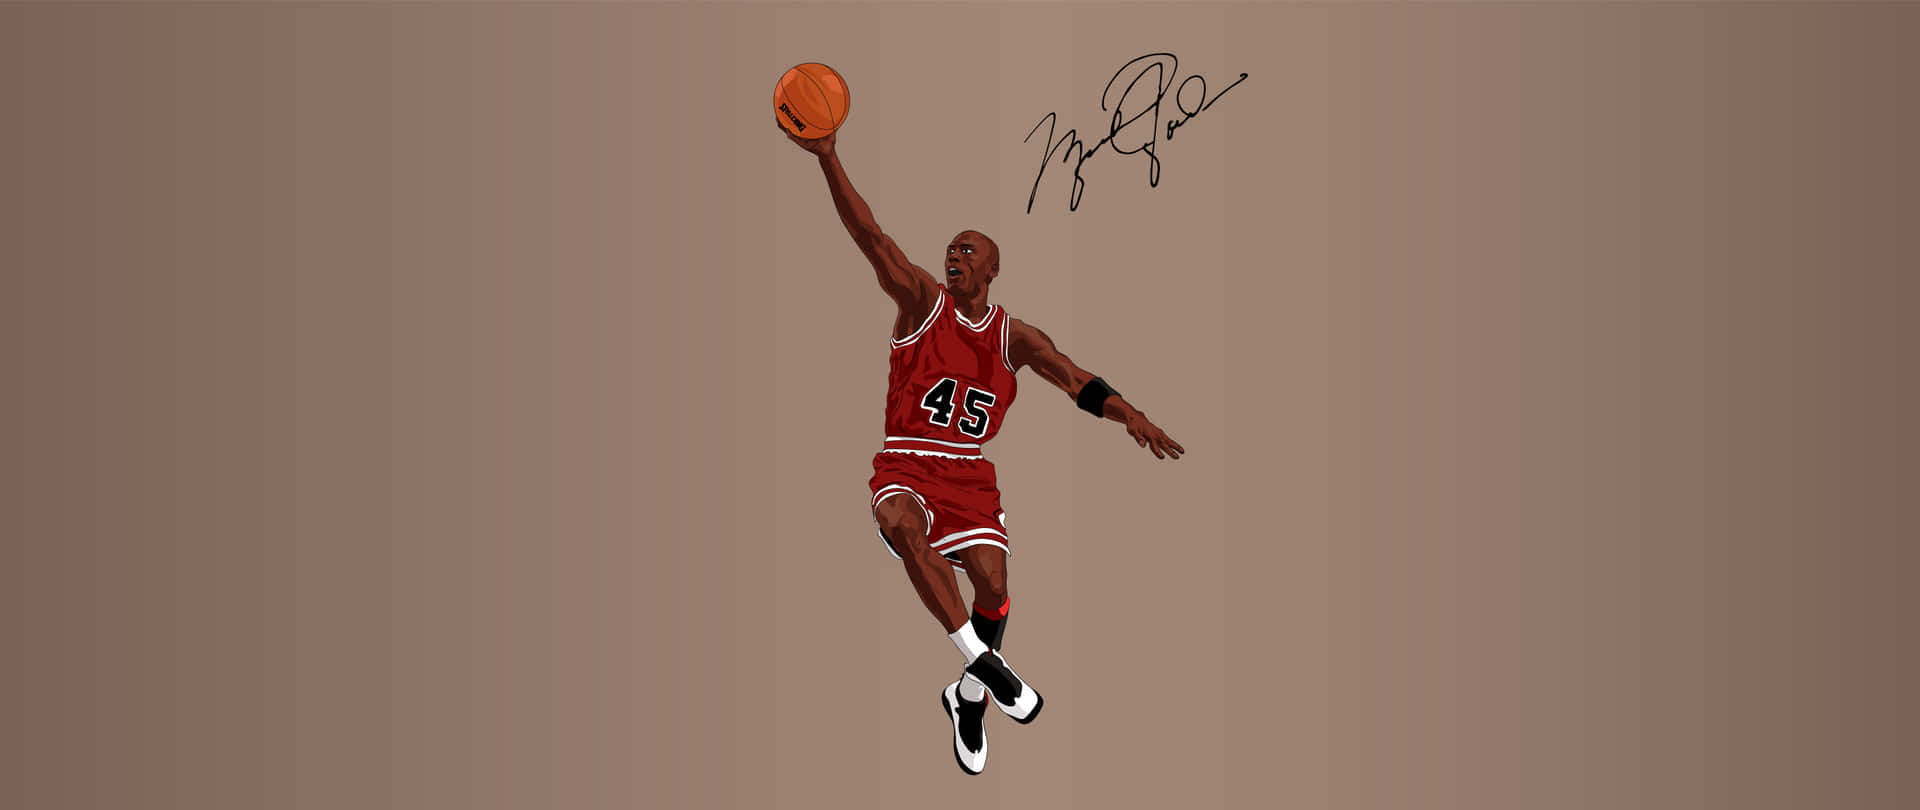 Basketball Legend Airborne45 Wallpaper